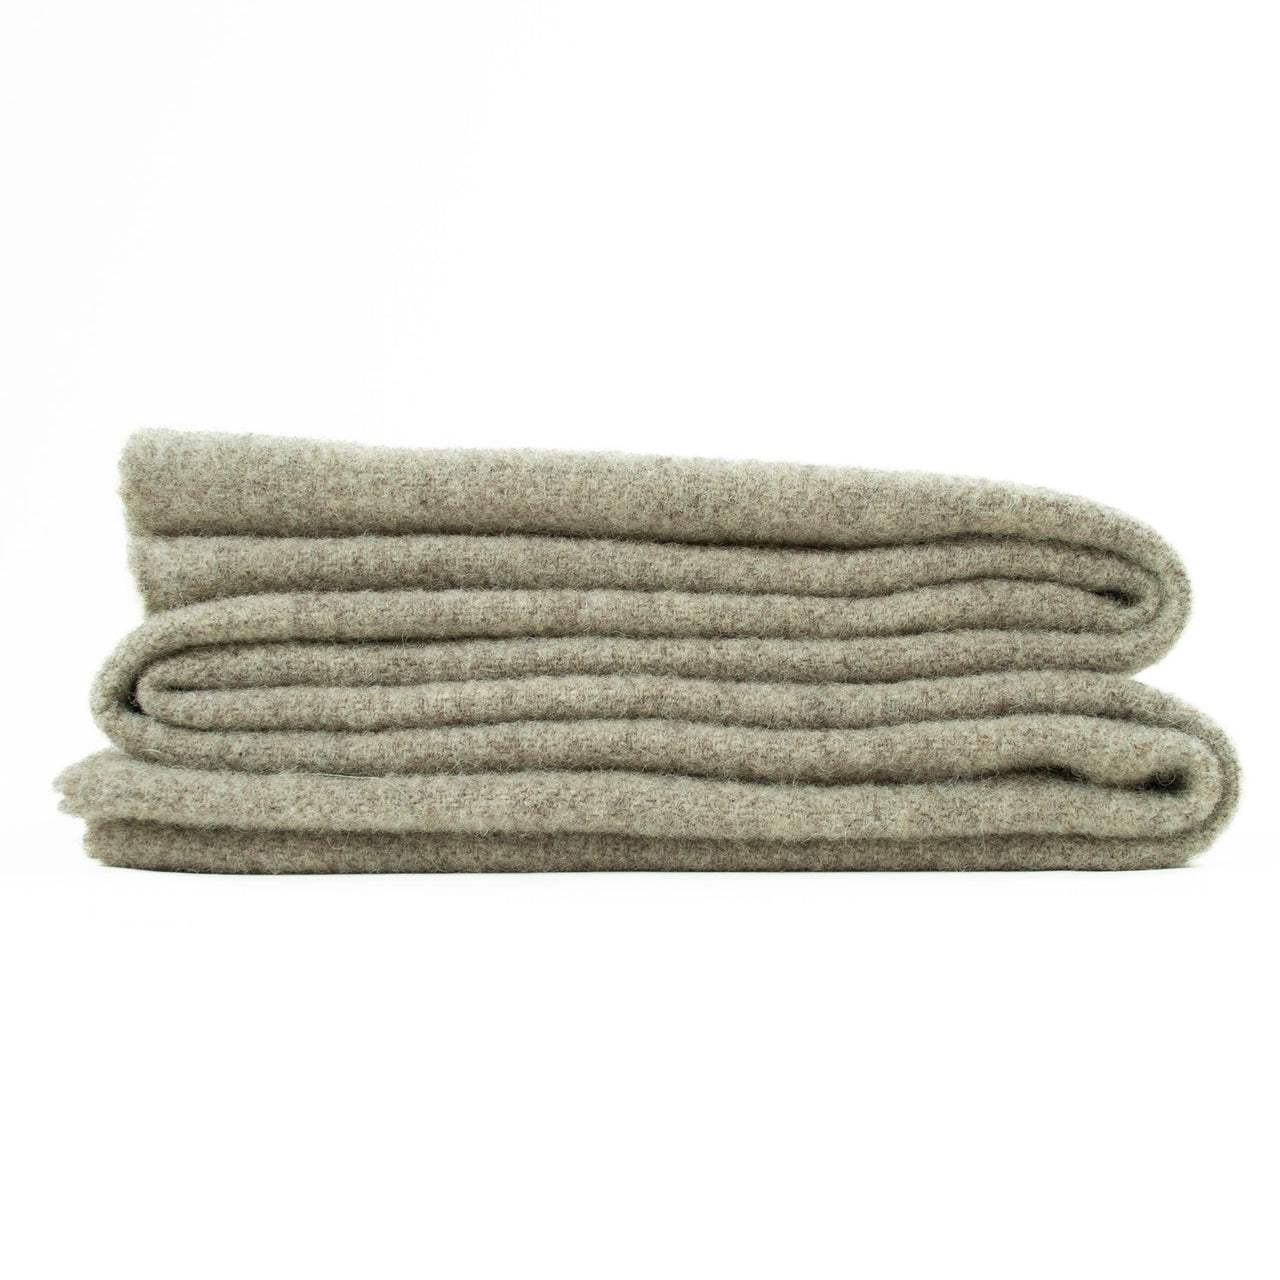 Brown Sheep Wool Blanket – Heavy & Thick Soft Warm Throw Blanket